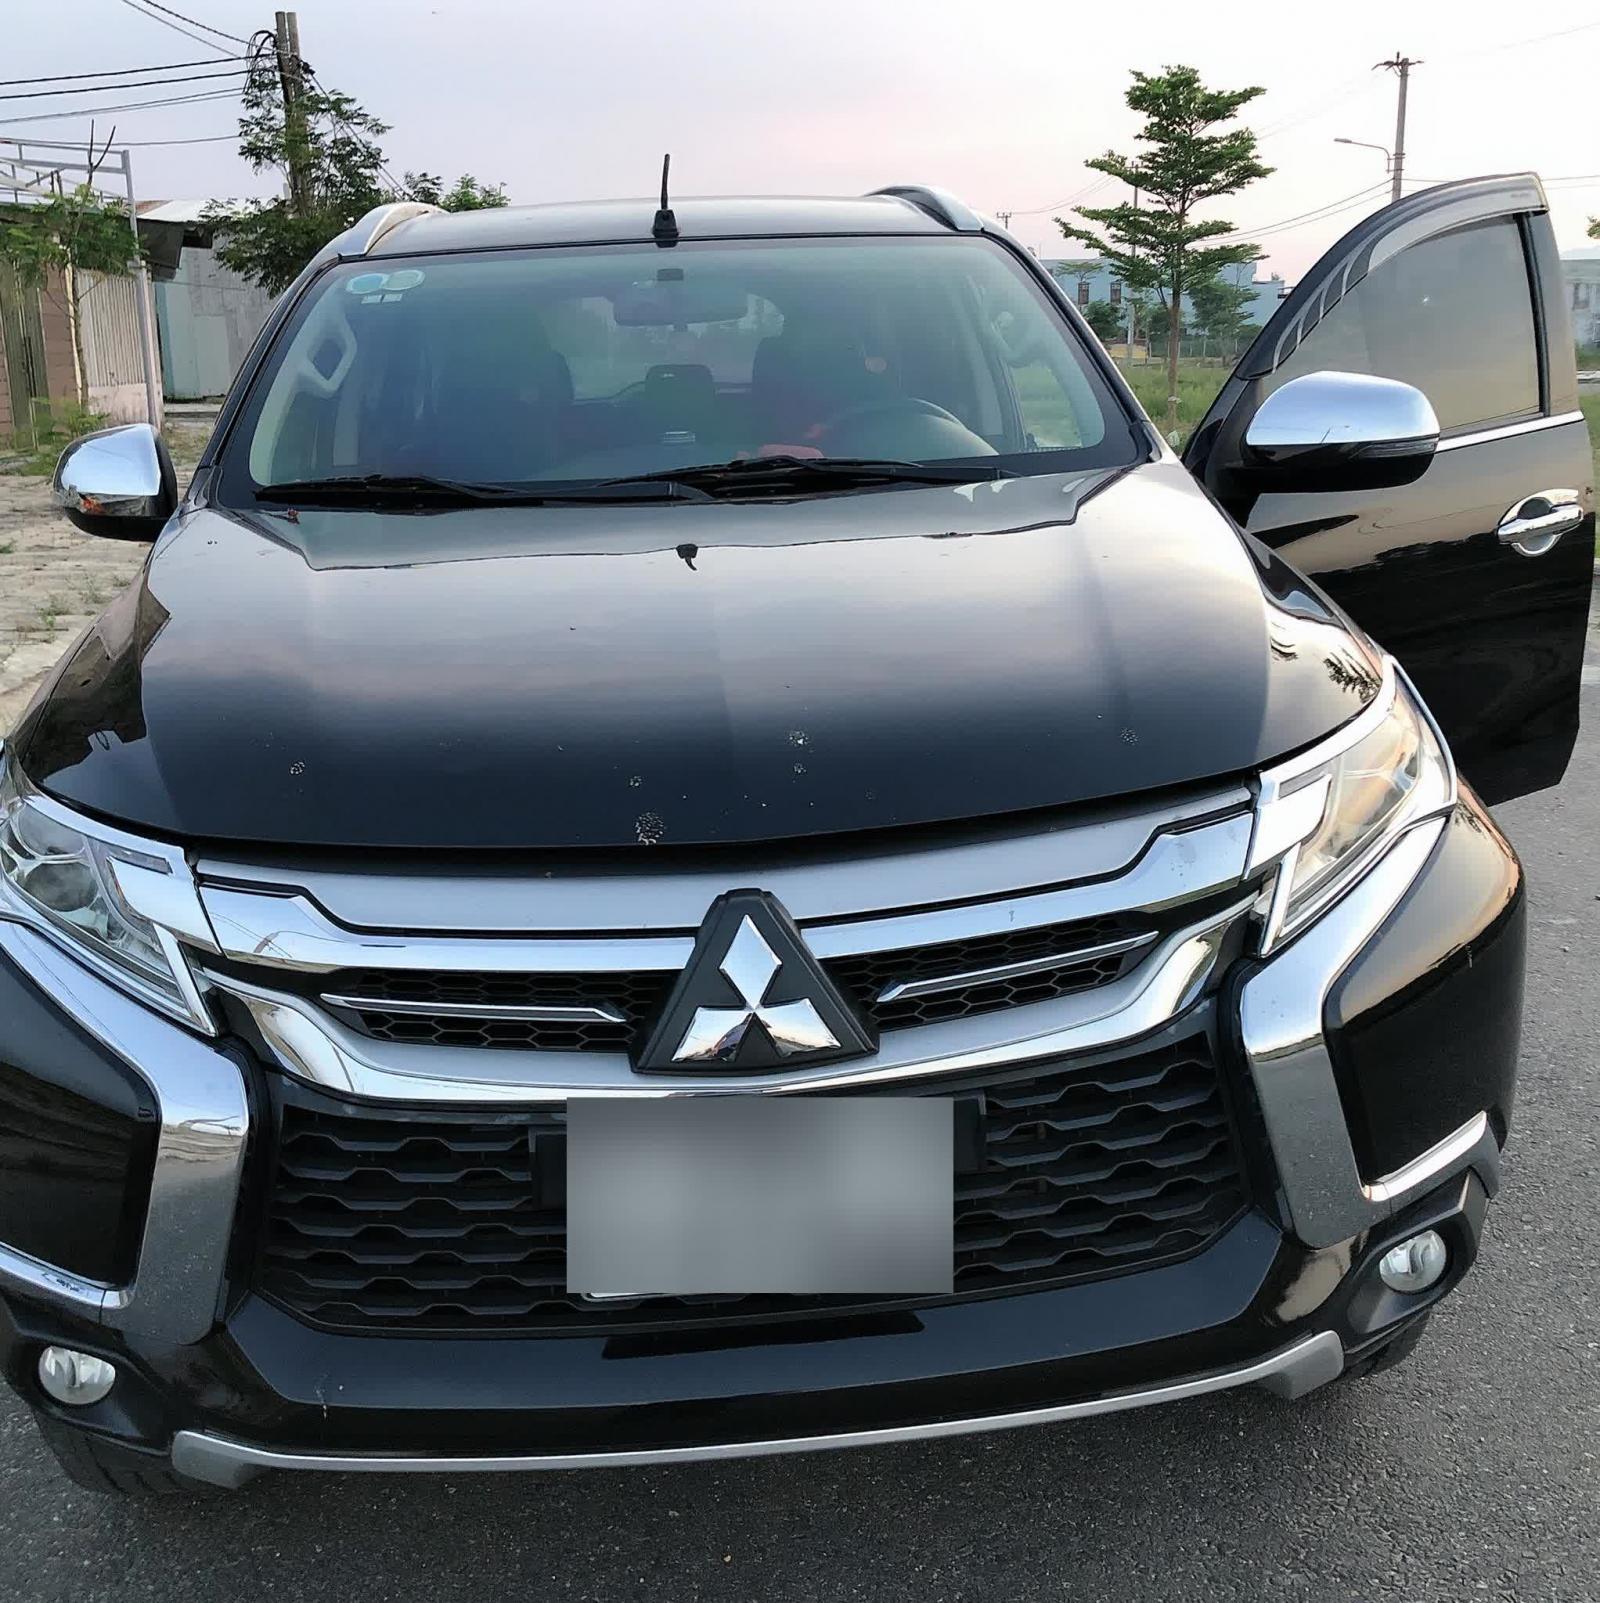 Mitsubishi Pajero 2019 - CHÍNH CHỦ BÁN XE 7 CHỖ ,MiTSUBISHI PAjERO SPORT 2.4D MT 2019